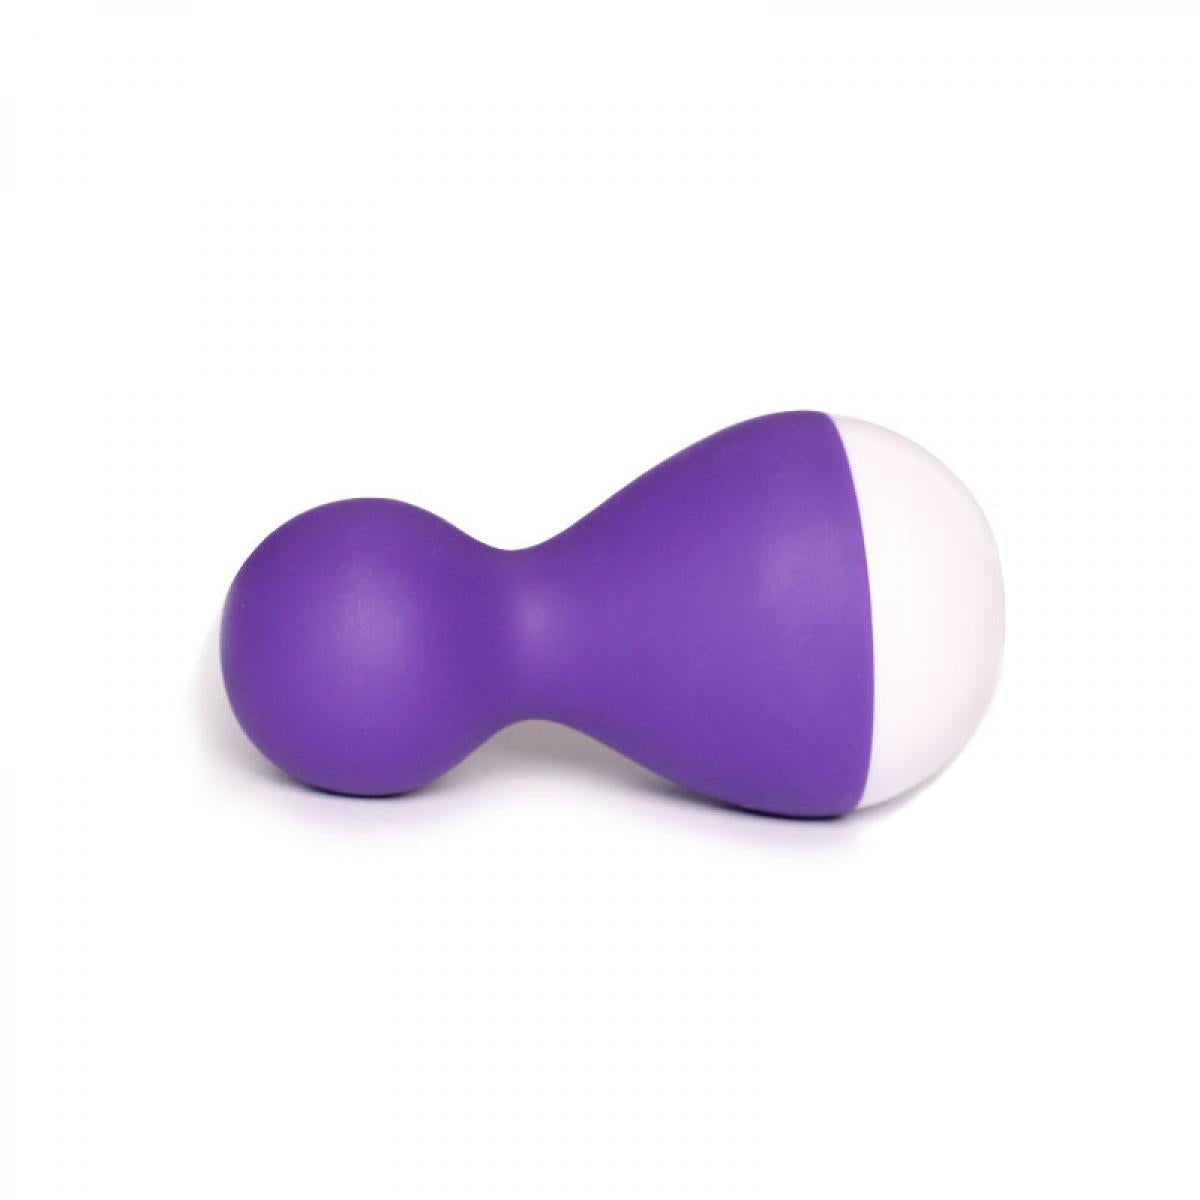 NeoJoy 7 Function Breast-Clitoris Stimulator - Purple+ Raspberry System JO lube